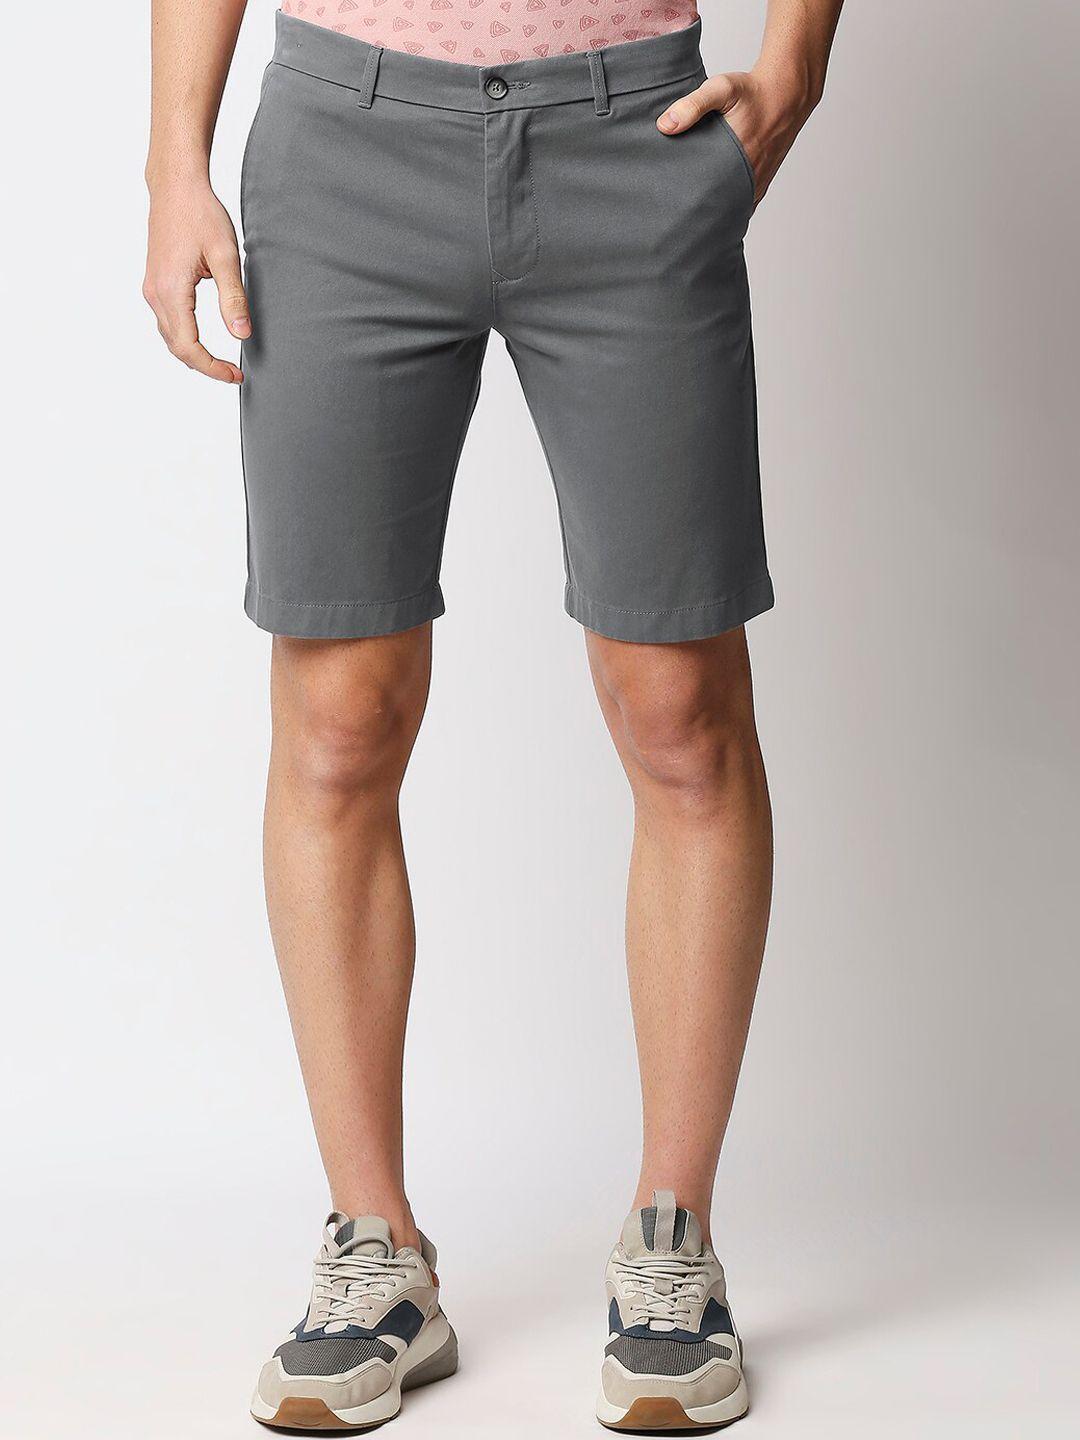 basics men grey pure cotton shorts